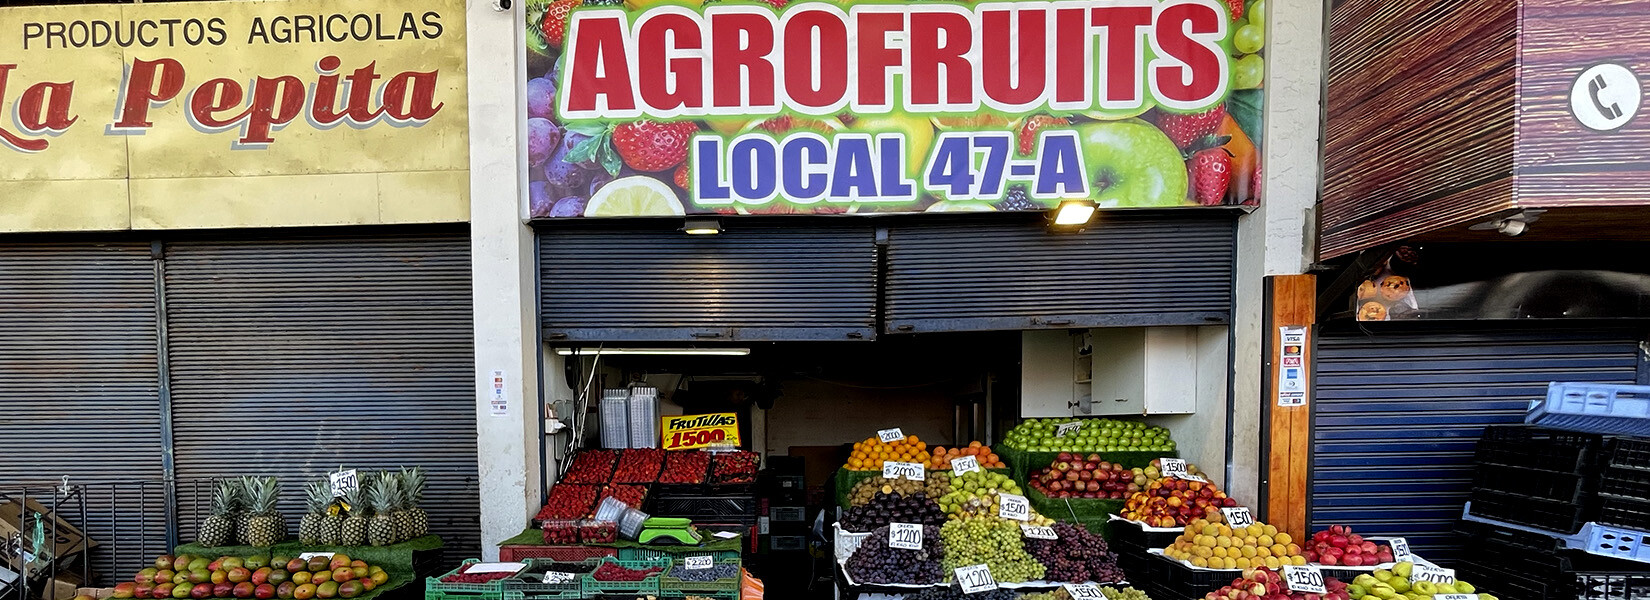 Agrofruits Loc 47-A